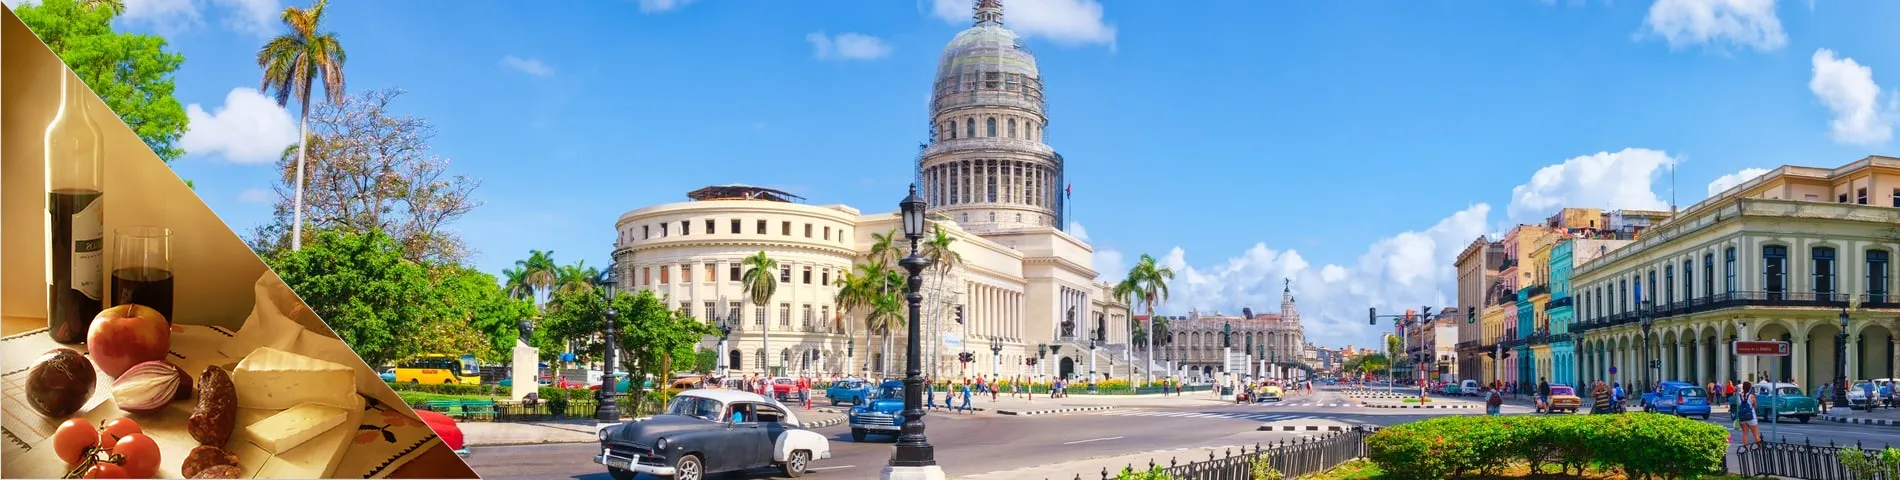 Havanna - Spanisch & Kultur